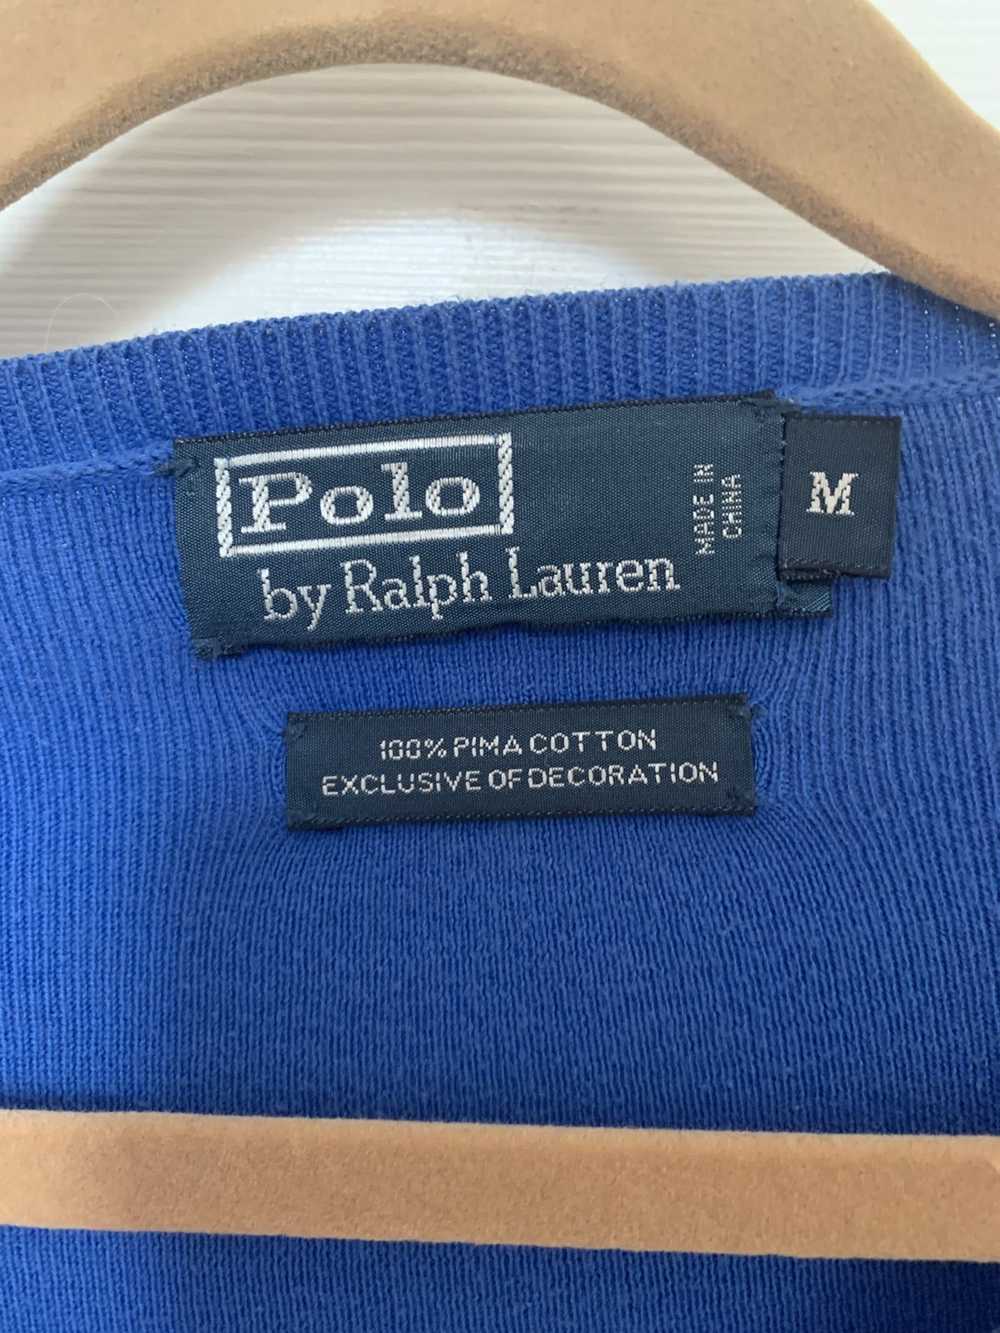 Polo Ralph Lauren Polo RL V neck Sweater - image 2